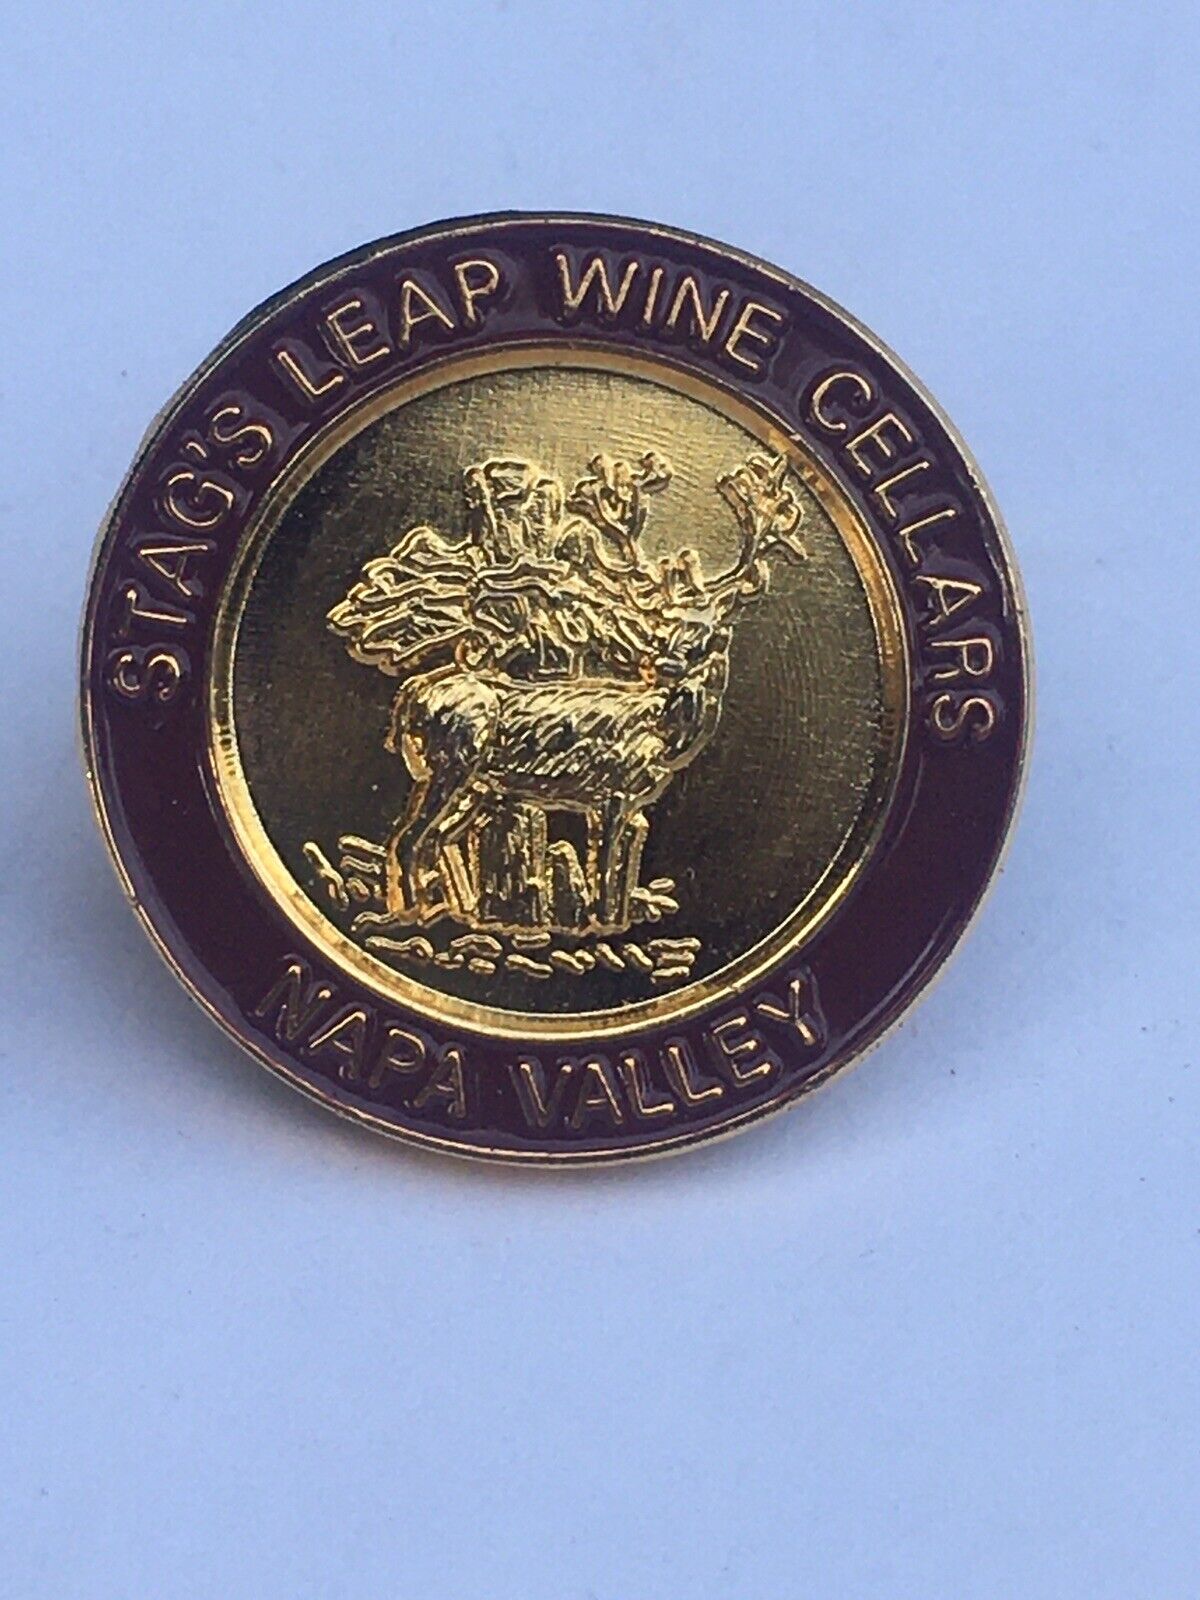 Stag\'s Leap Wine Cellars Napa Valley Liquor Alcohol Gold-Tone Souvenir Lapel Pin